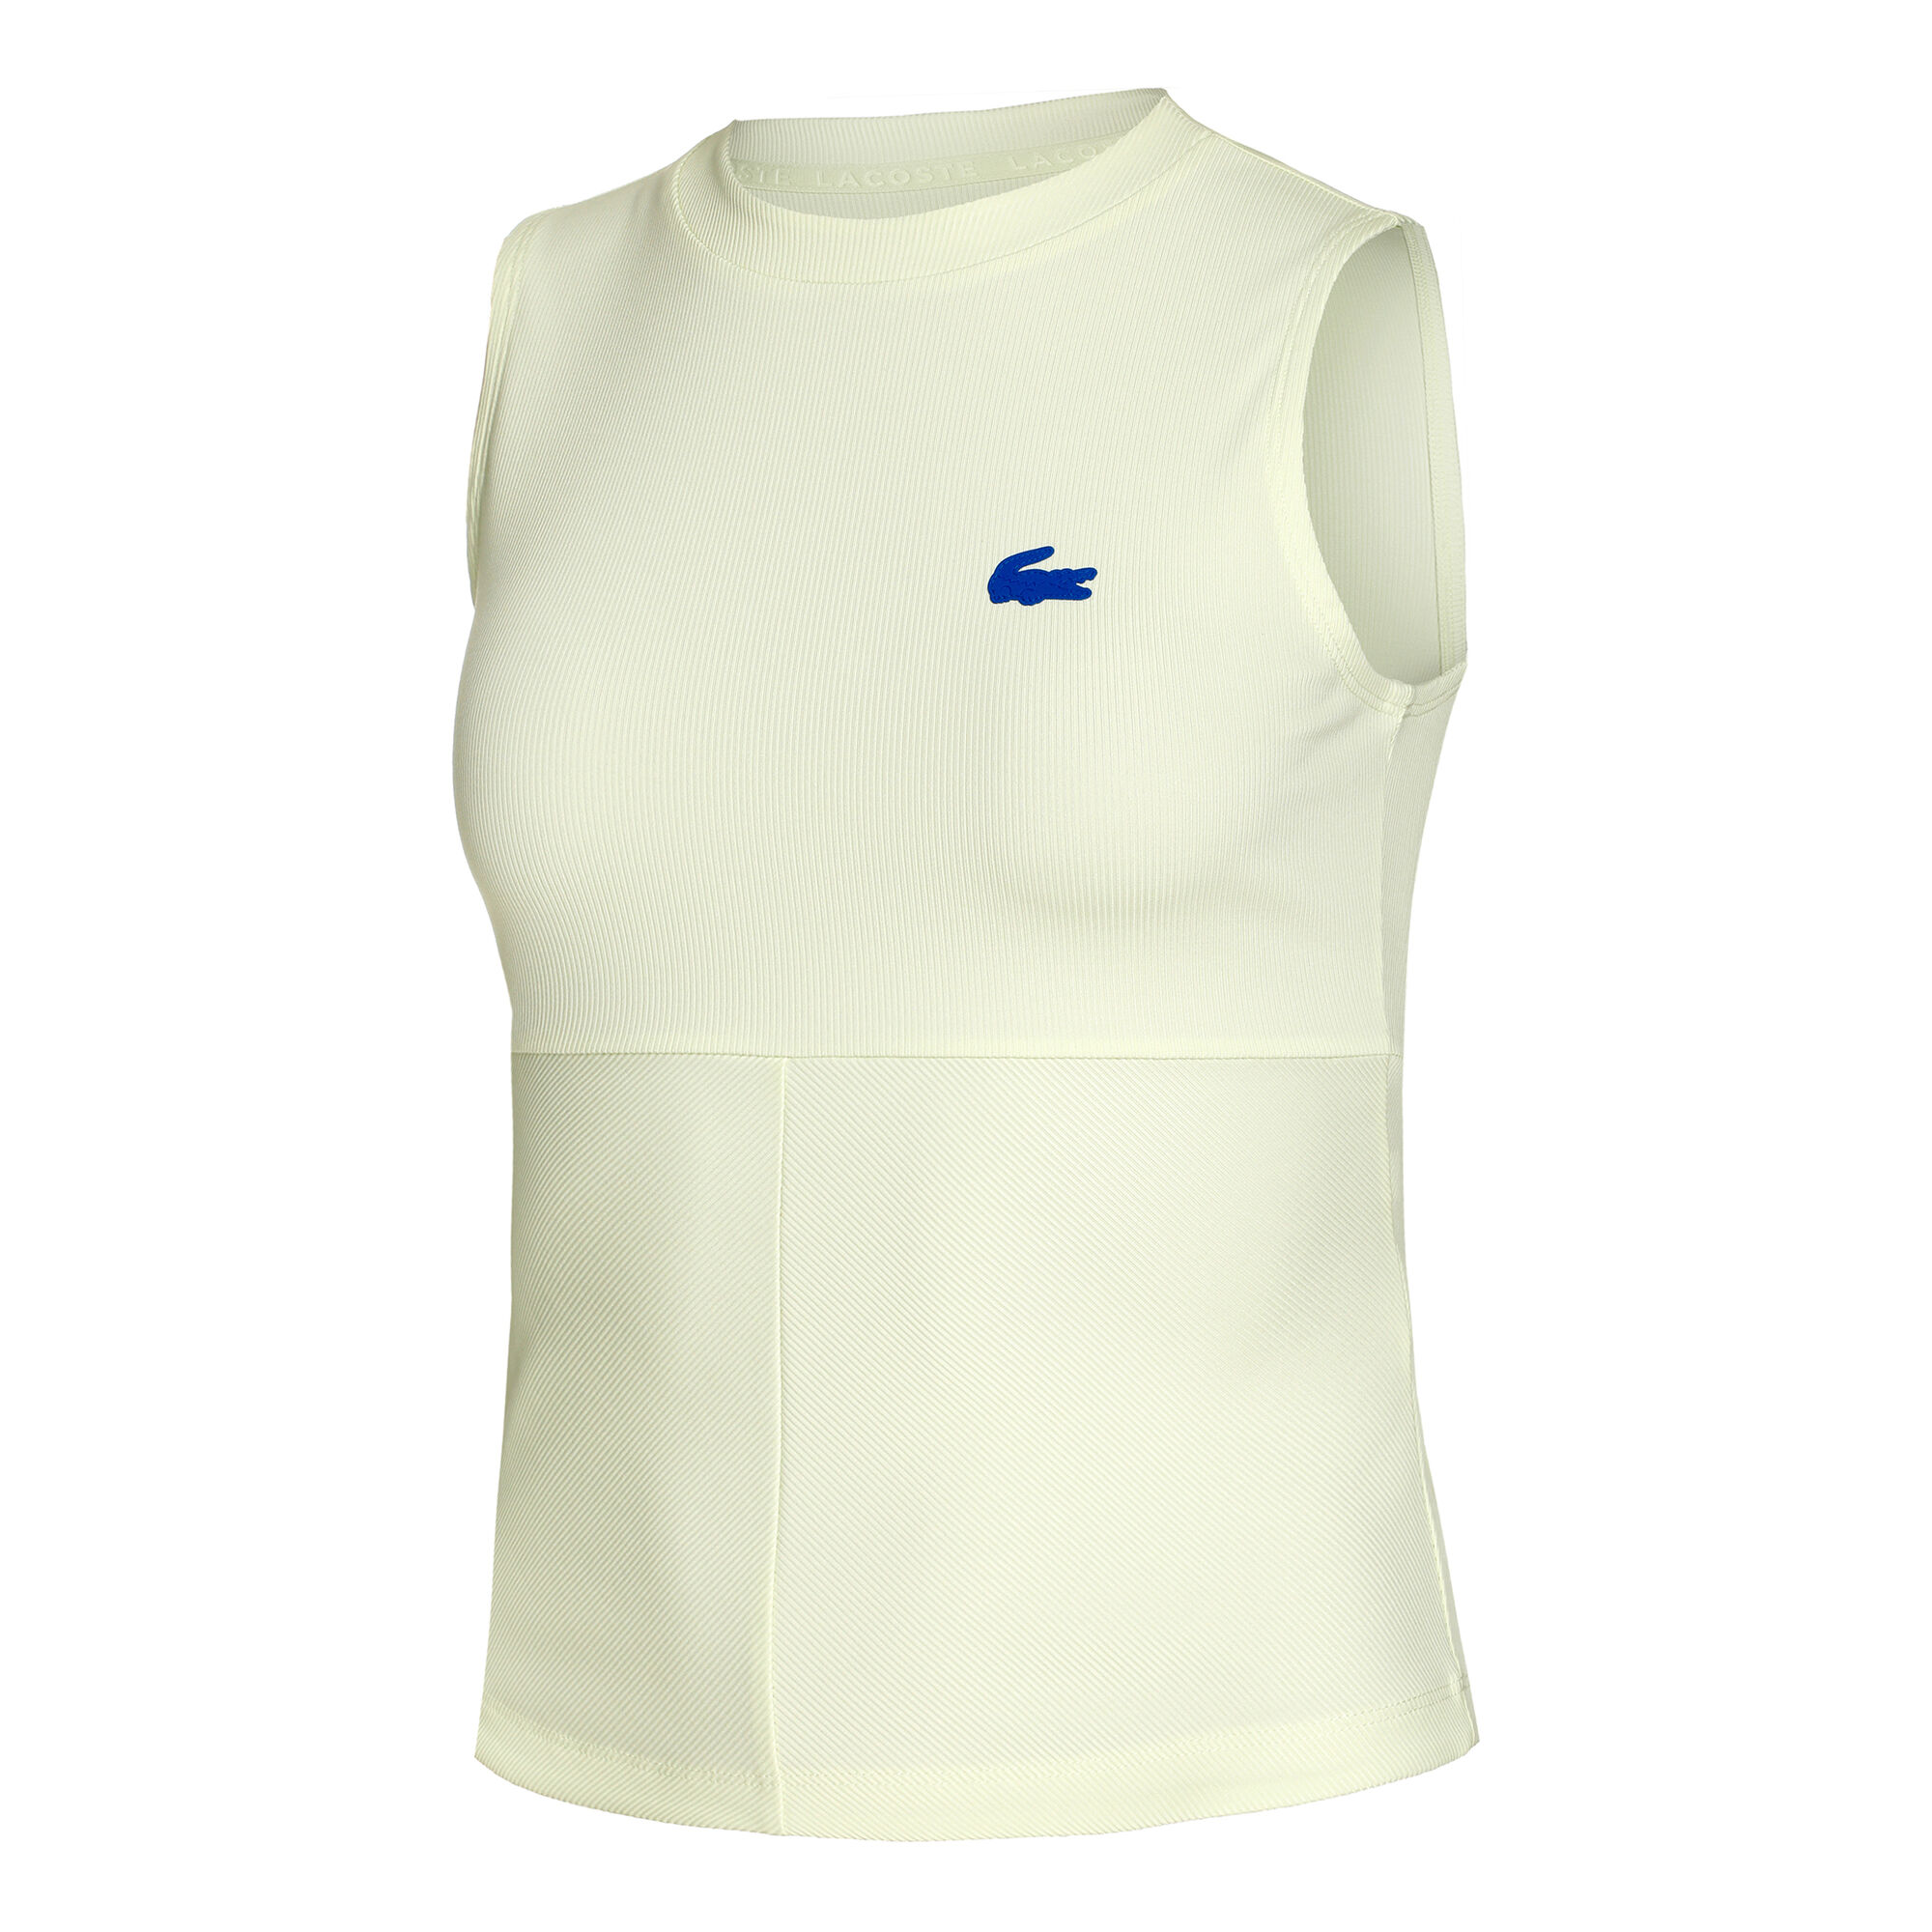 Lacoste T-shirt - Gul køb online | Tennis-Point